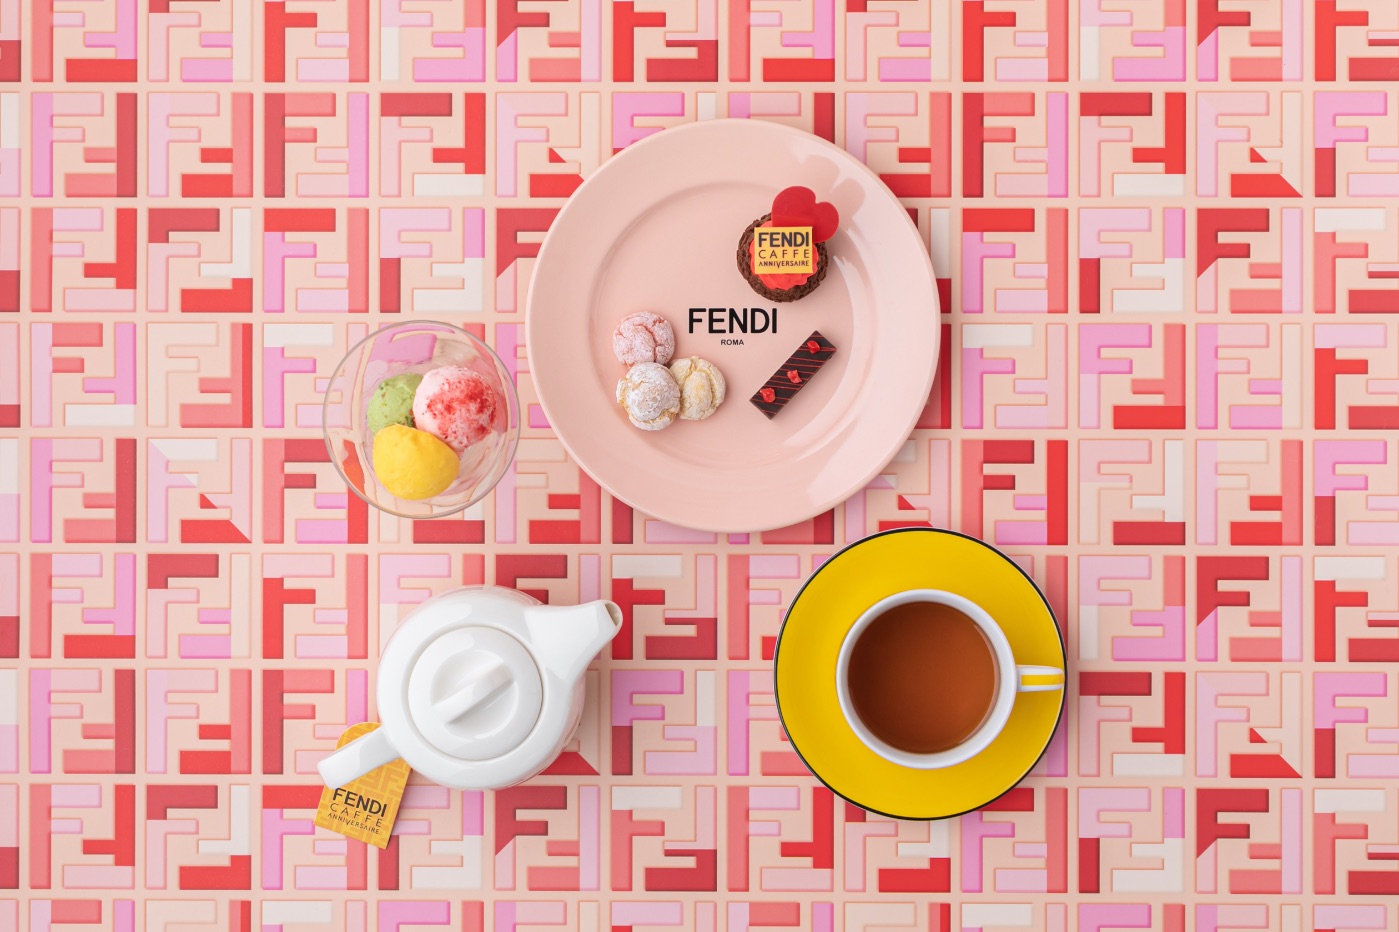 Tokyo: Fendi Caffè by Anniversaire opening